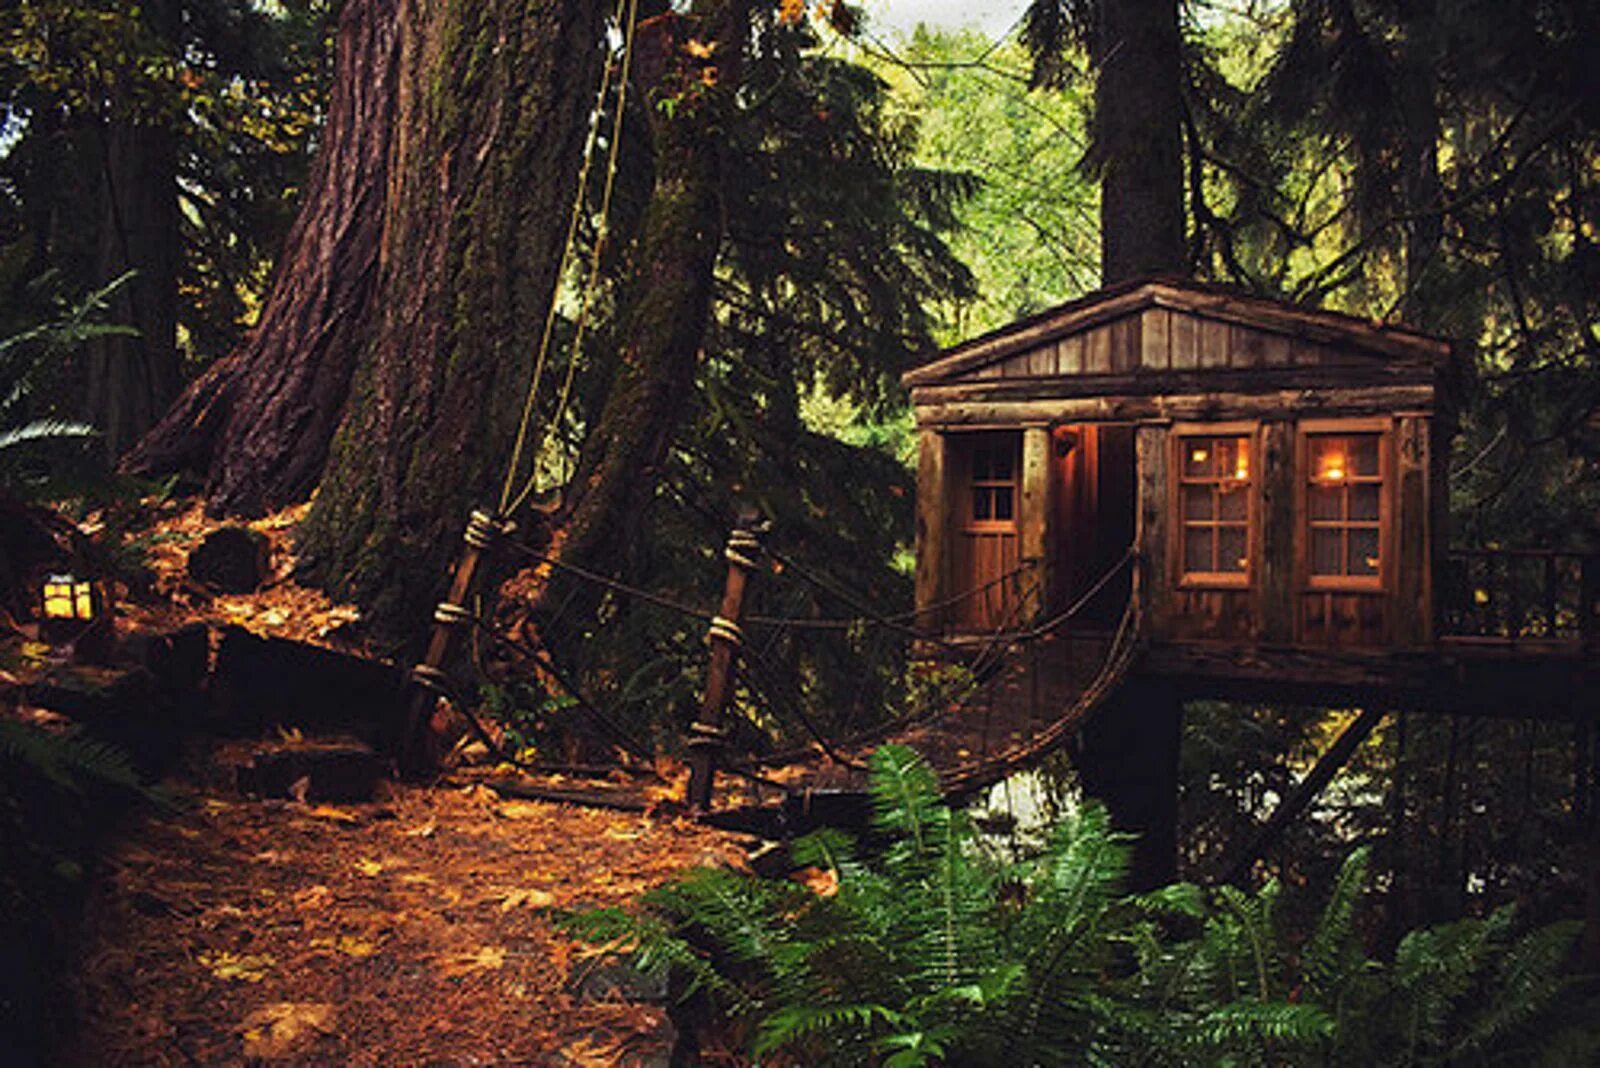 Дом на дереве (Британская Колумбия, Канада). Хижина гномов, Британская Колумбия. Друскининкай лес избушка. Домик на дереве Форест.